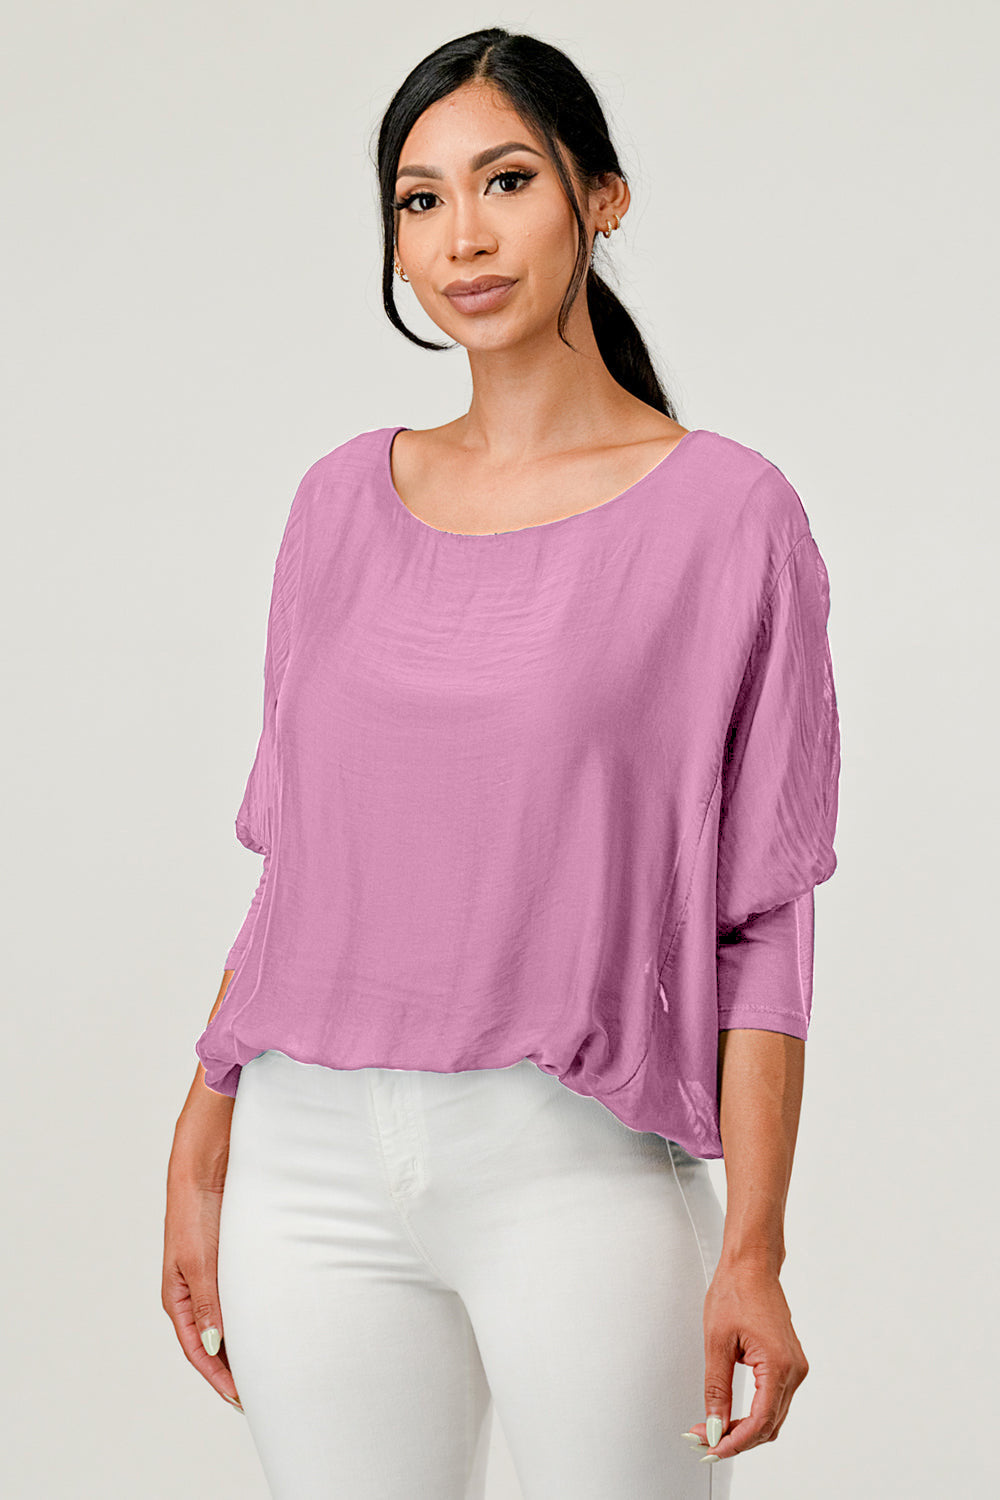 Raw Moda Solid Silk Elastic Sleeves Top Apparel & Accessories Raw Moda One Size Pink 